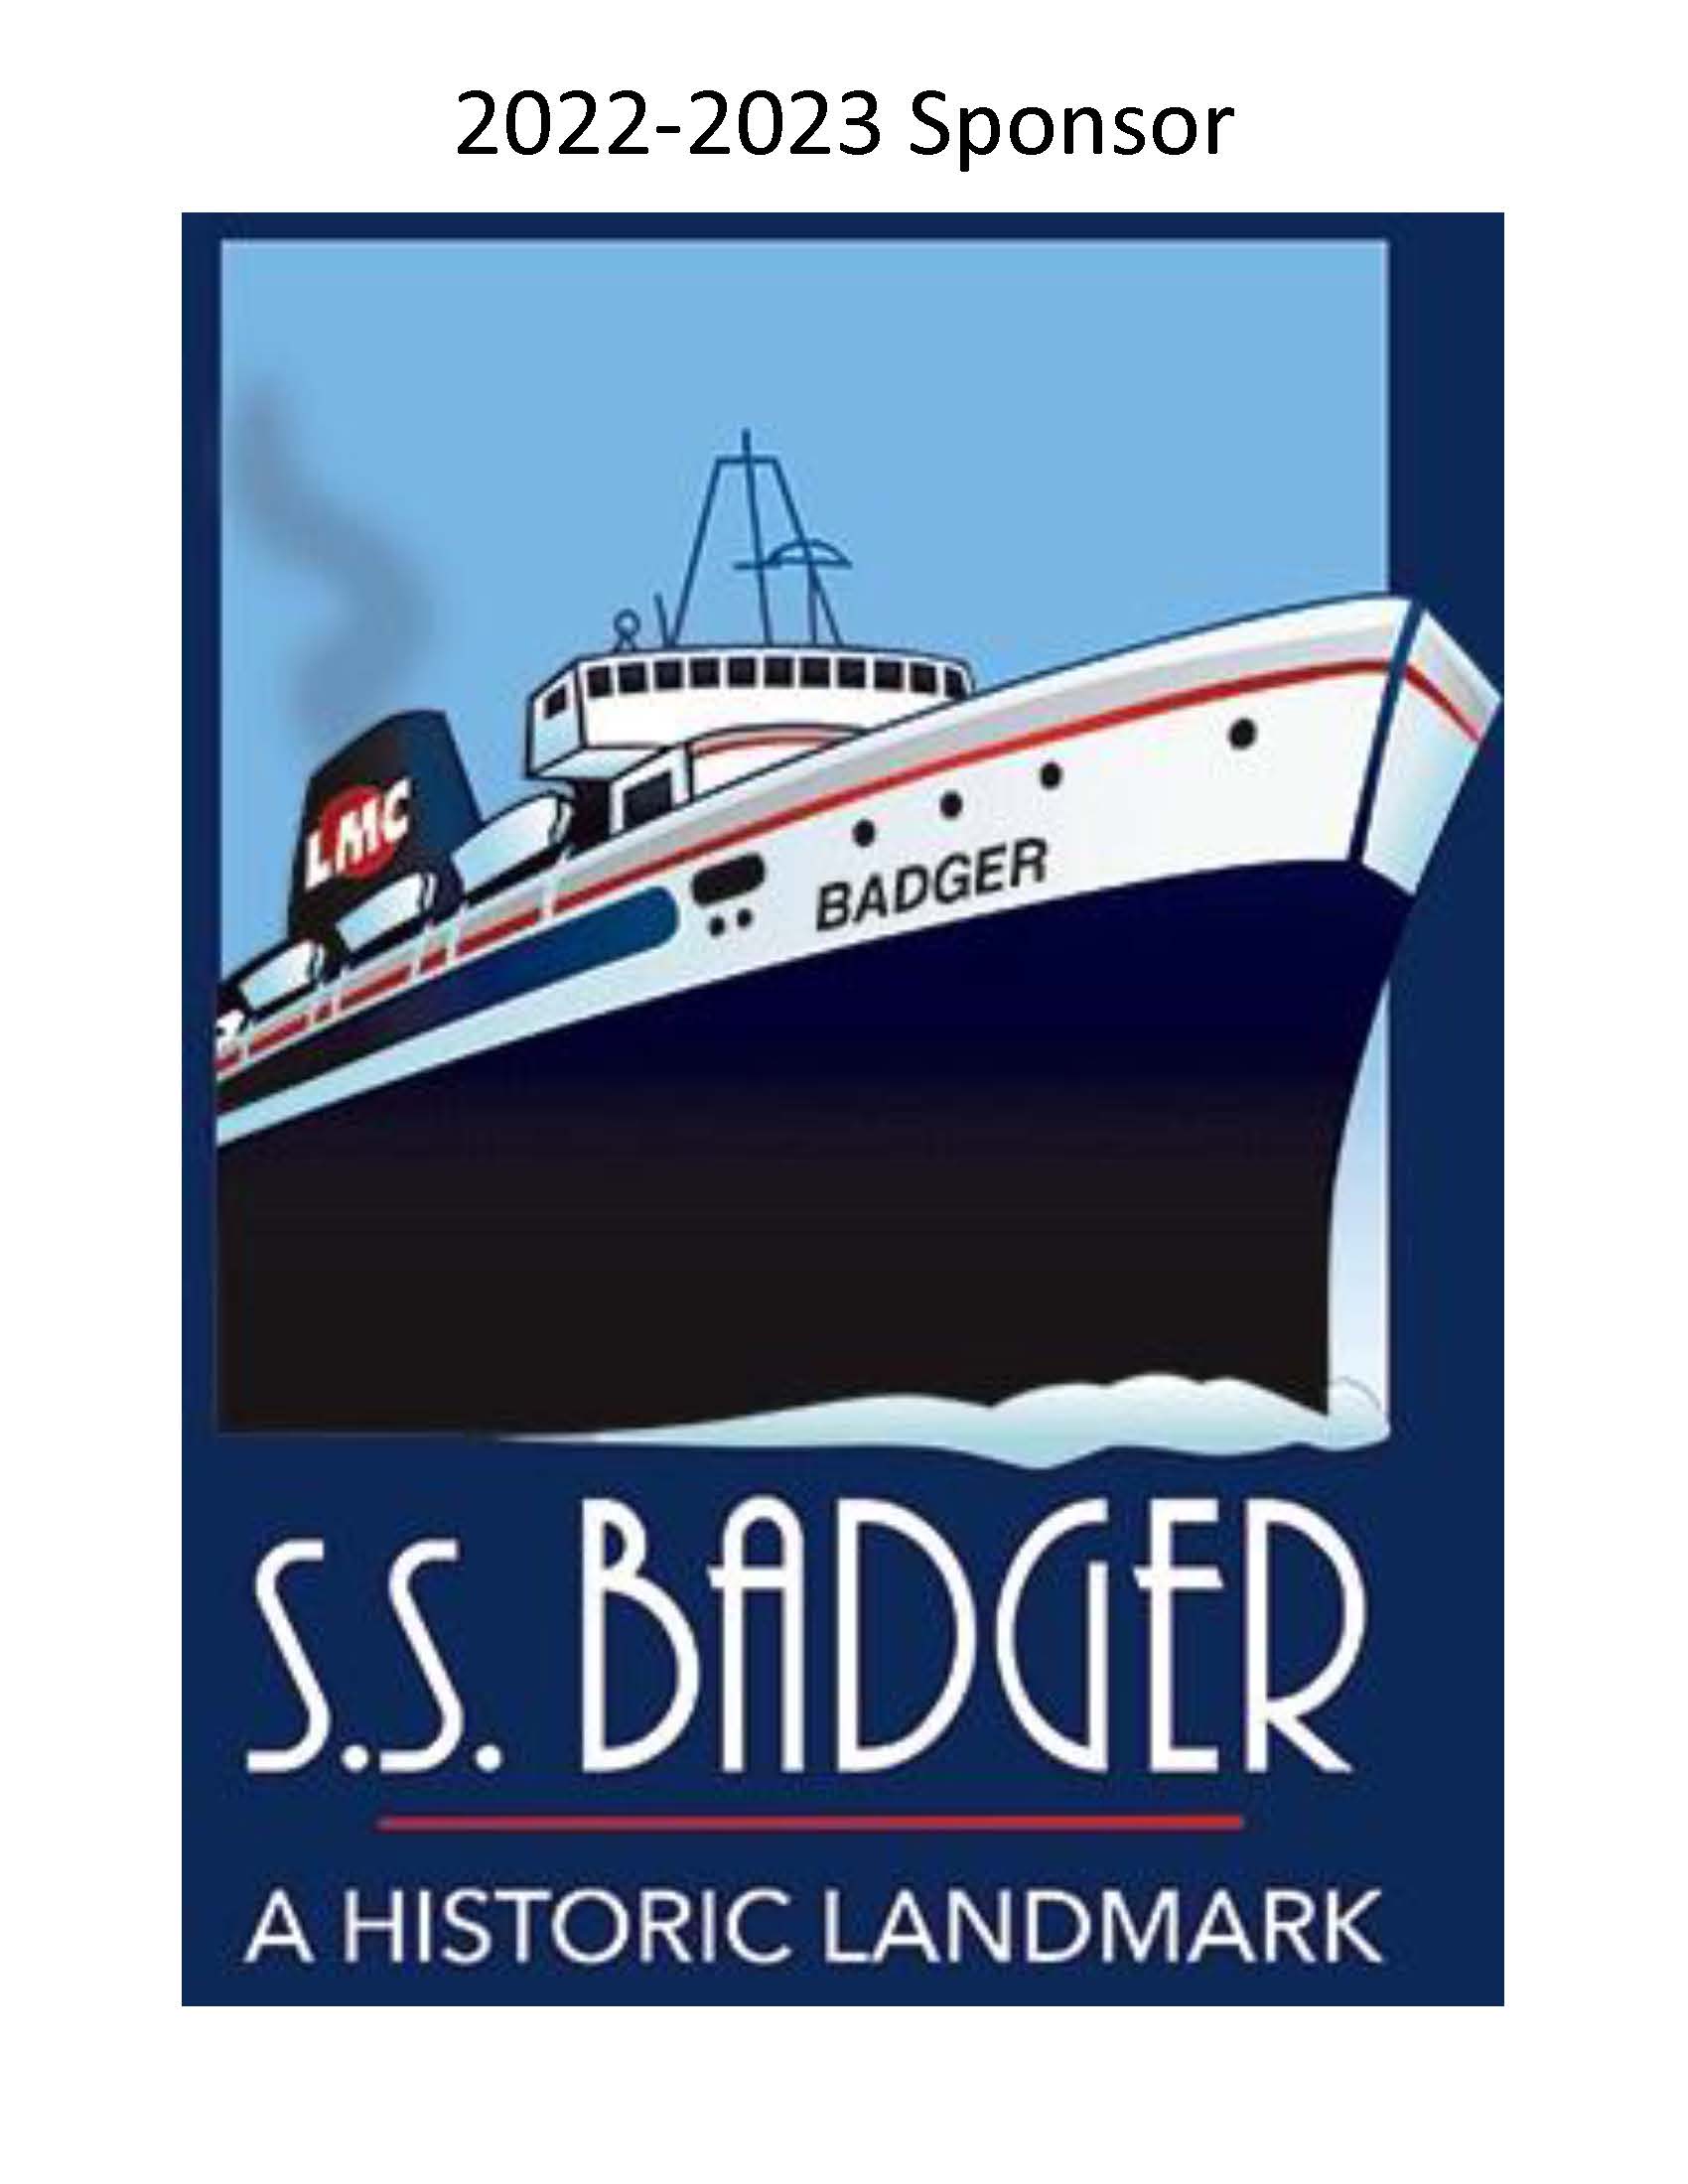 SS Badger 22-23